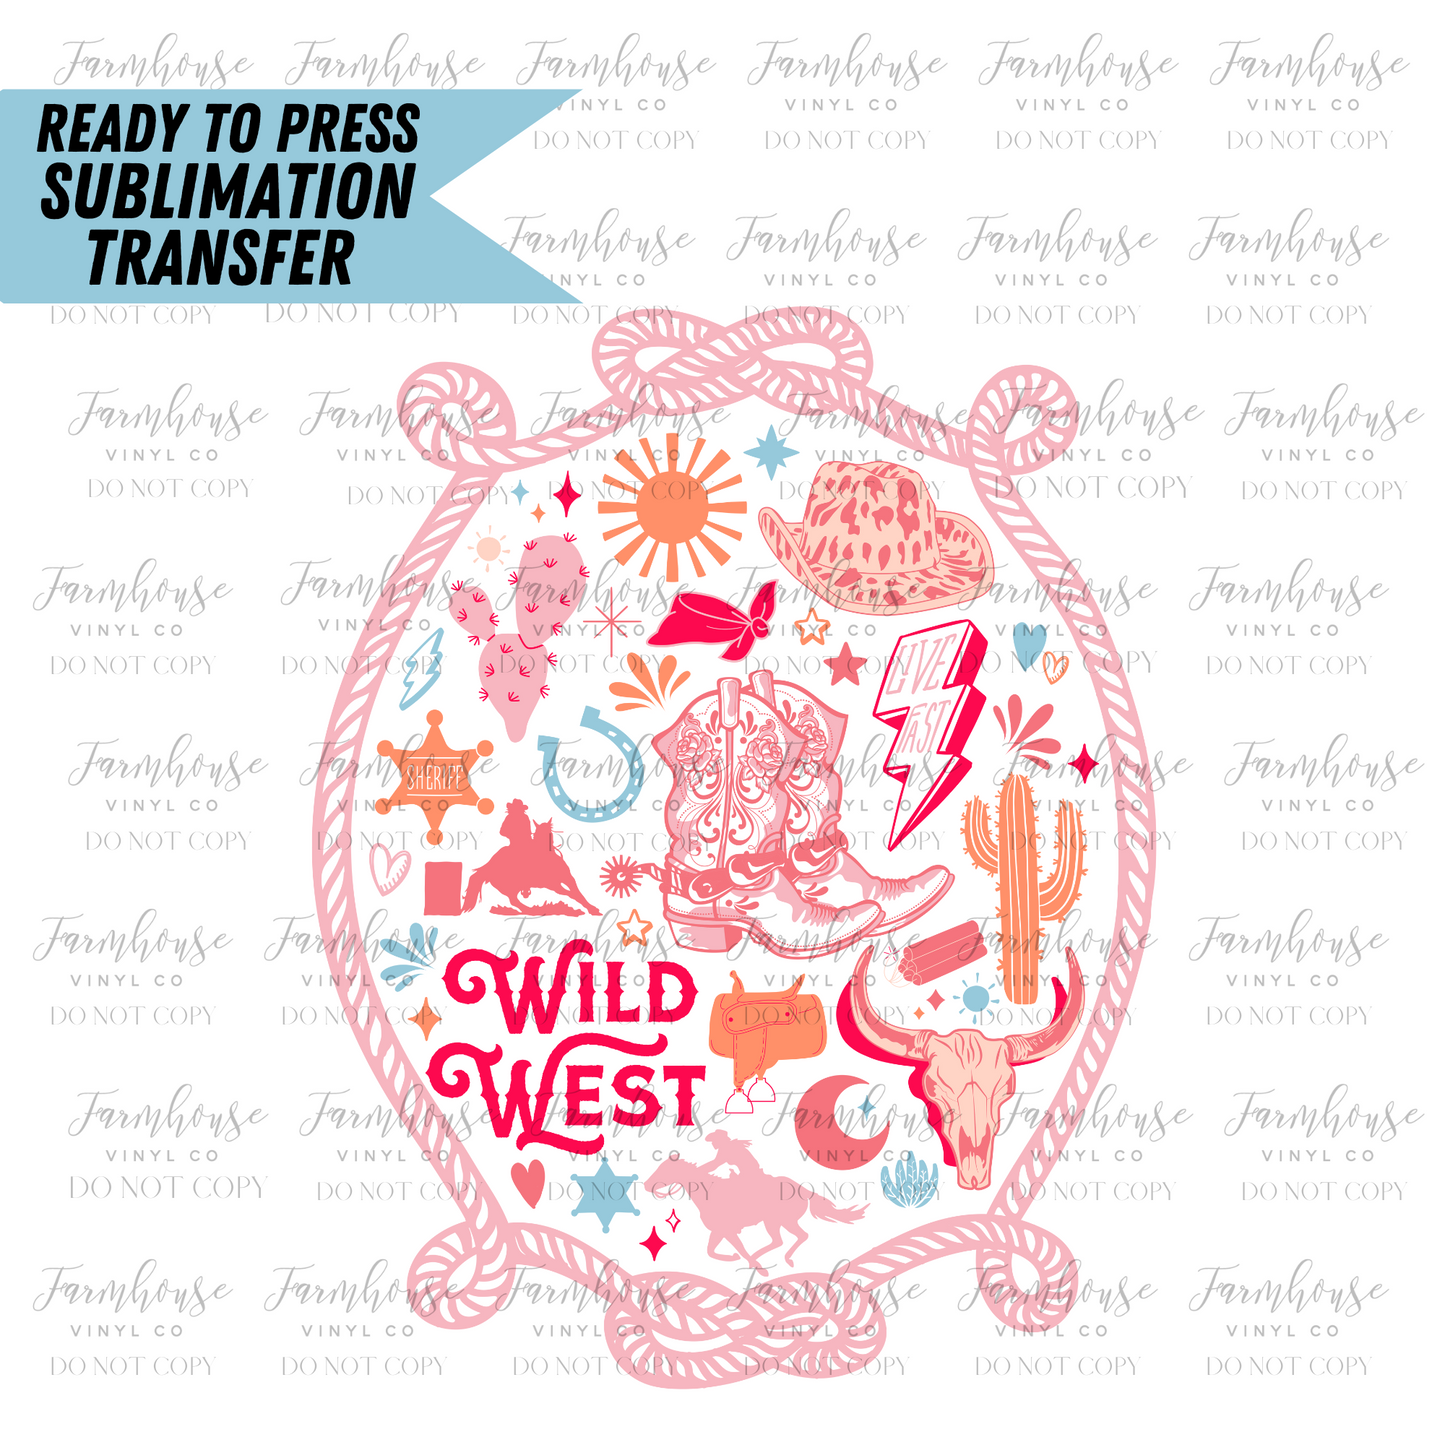 Wild West Western Ready to Press Sublimation Transfer - Farmhouse Vinyl Co